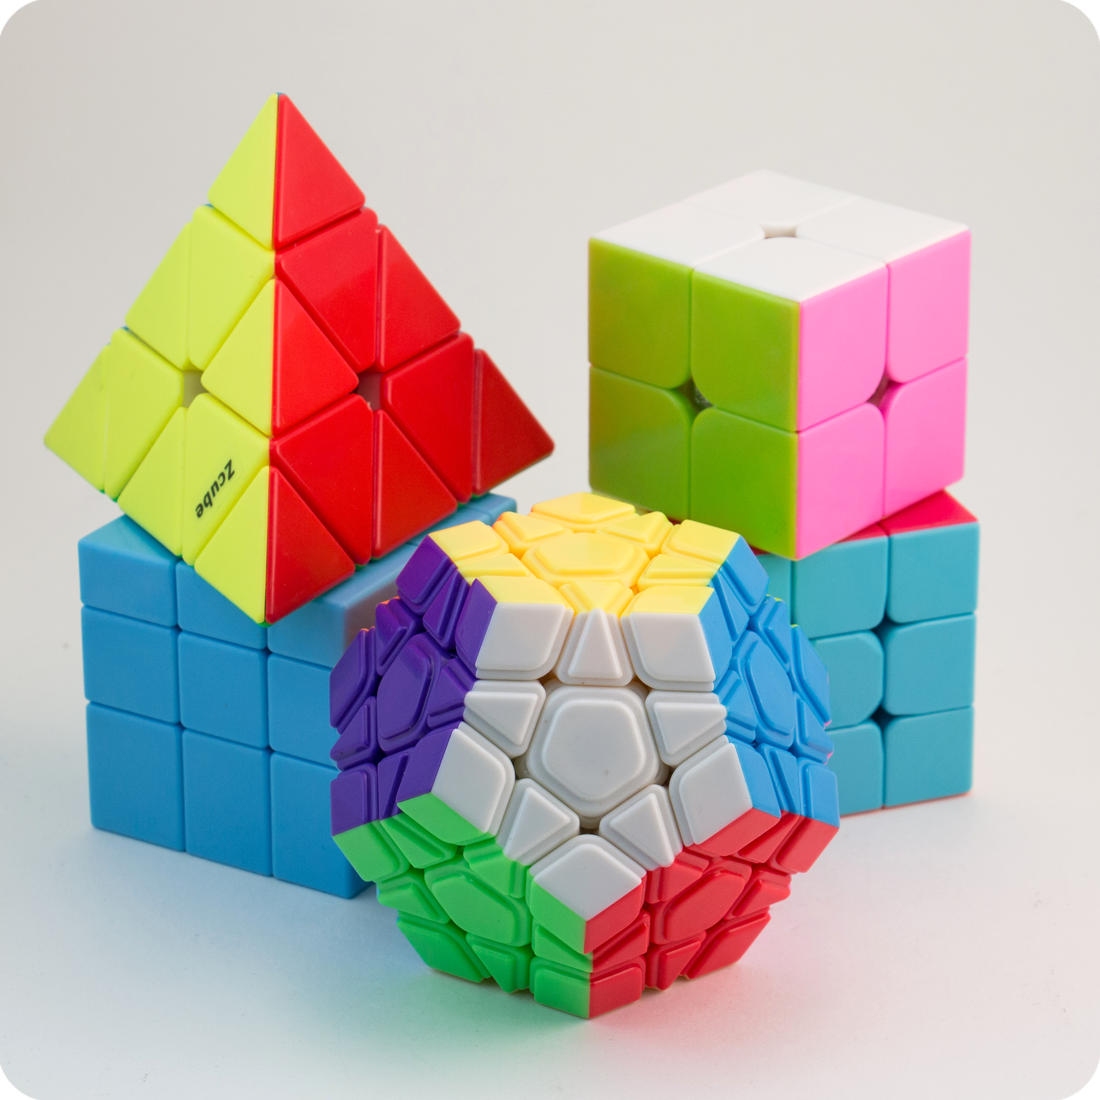 Z-Cube 3x3x3 Monet 1. MOFANGGE 3x3x3 Cube Tutorial. Трехгранник кубик. 3x3x3 Cubic rasmi. Включи куб 5